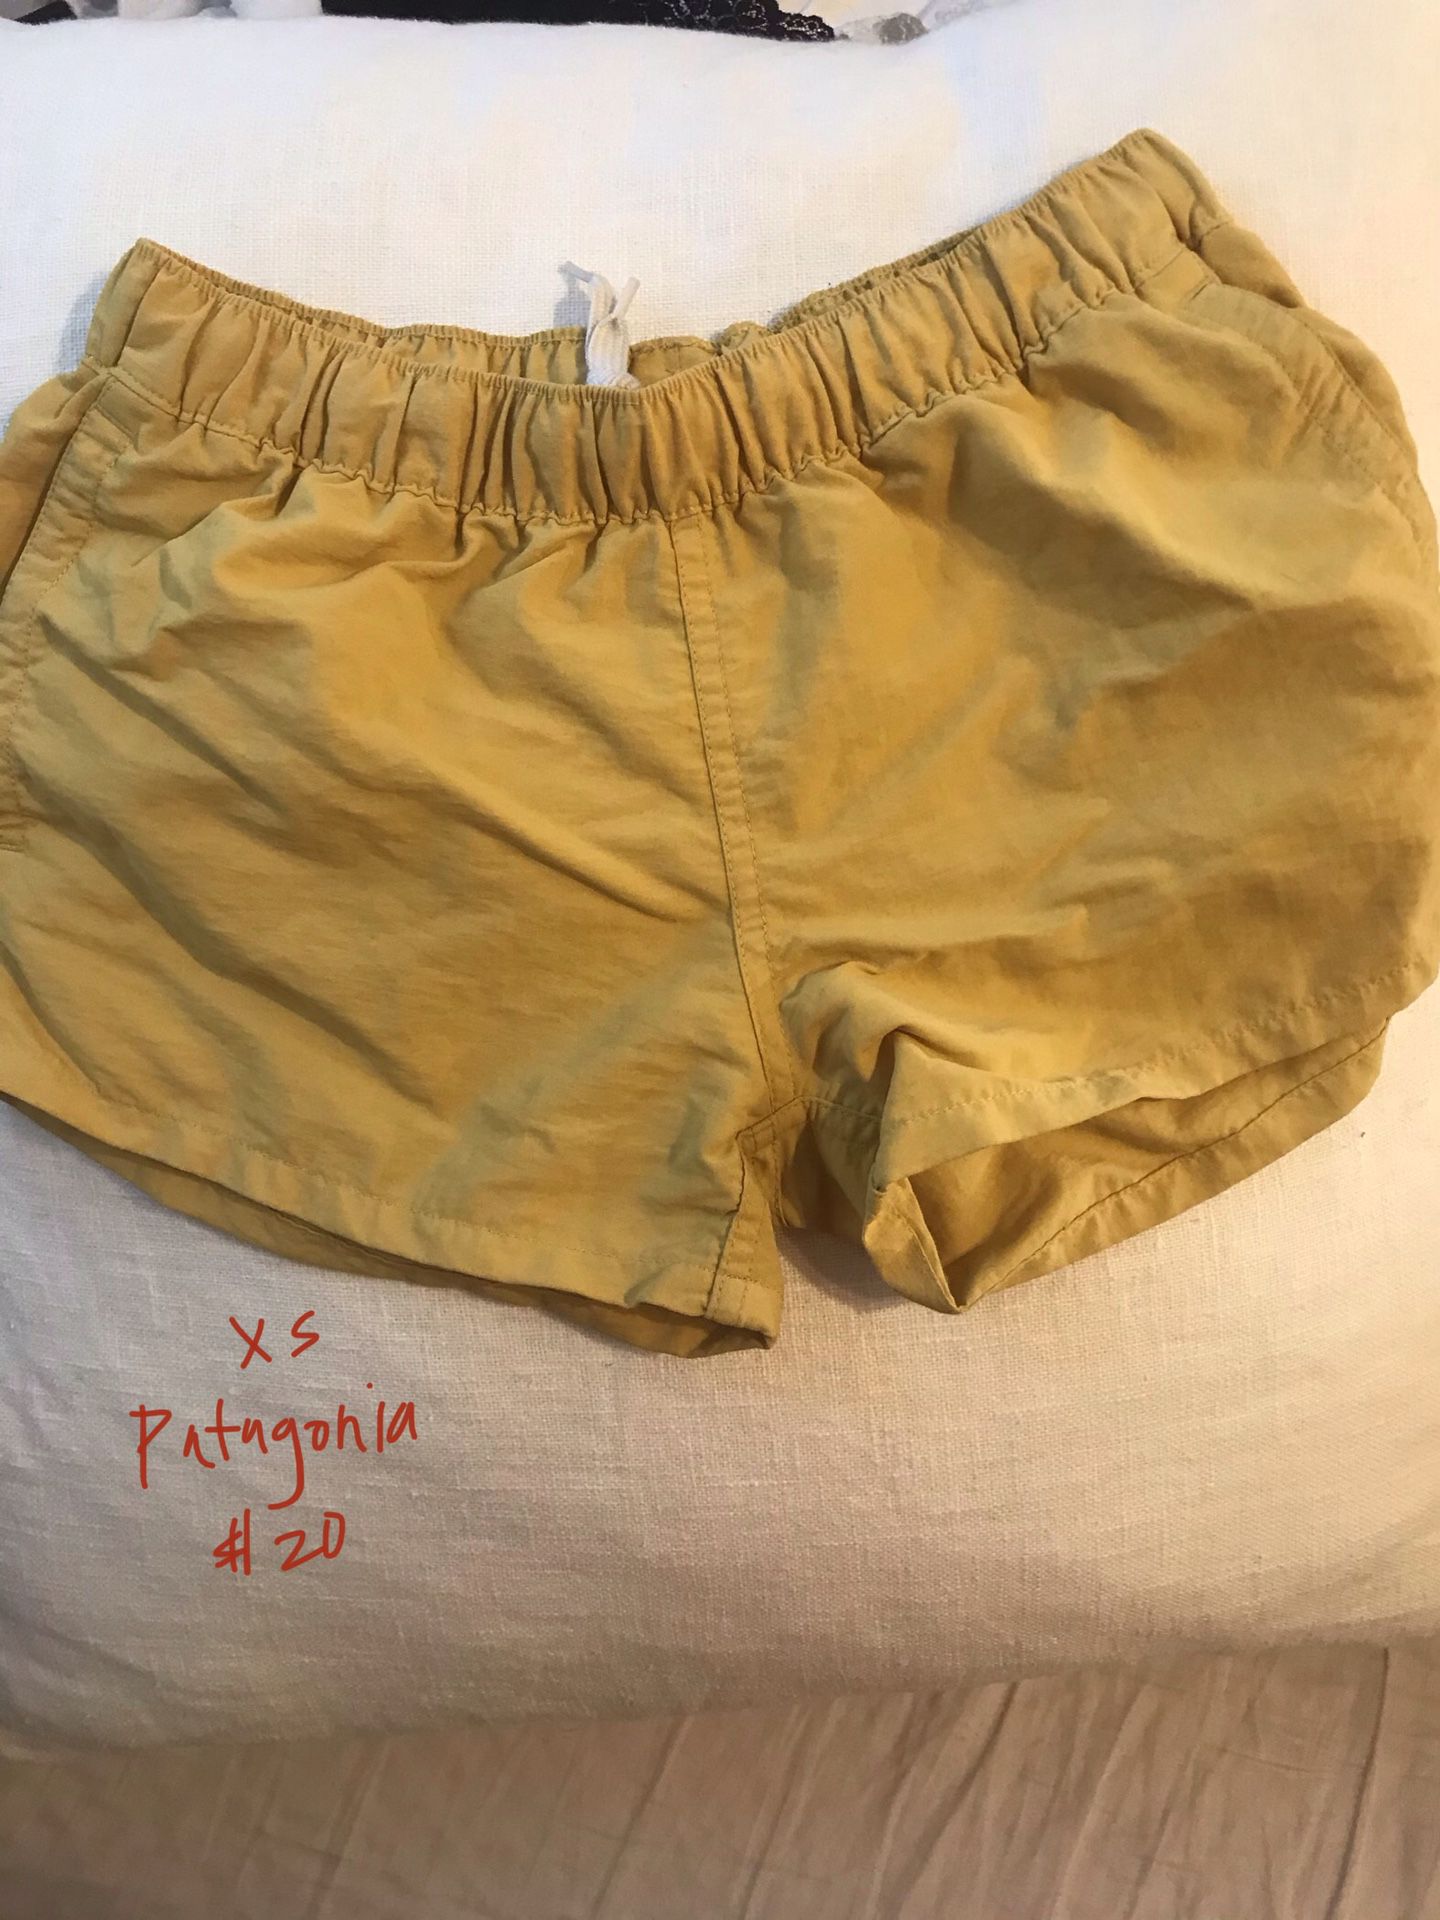 Patagonia yellow shorts xs